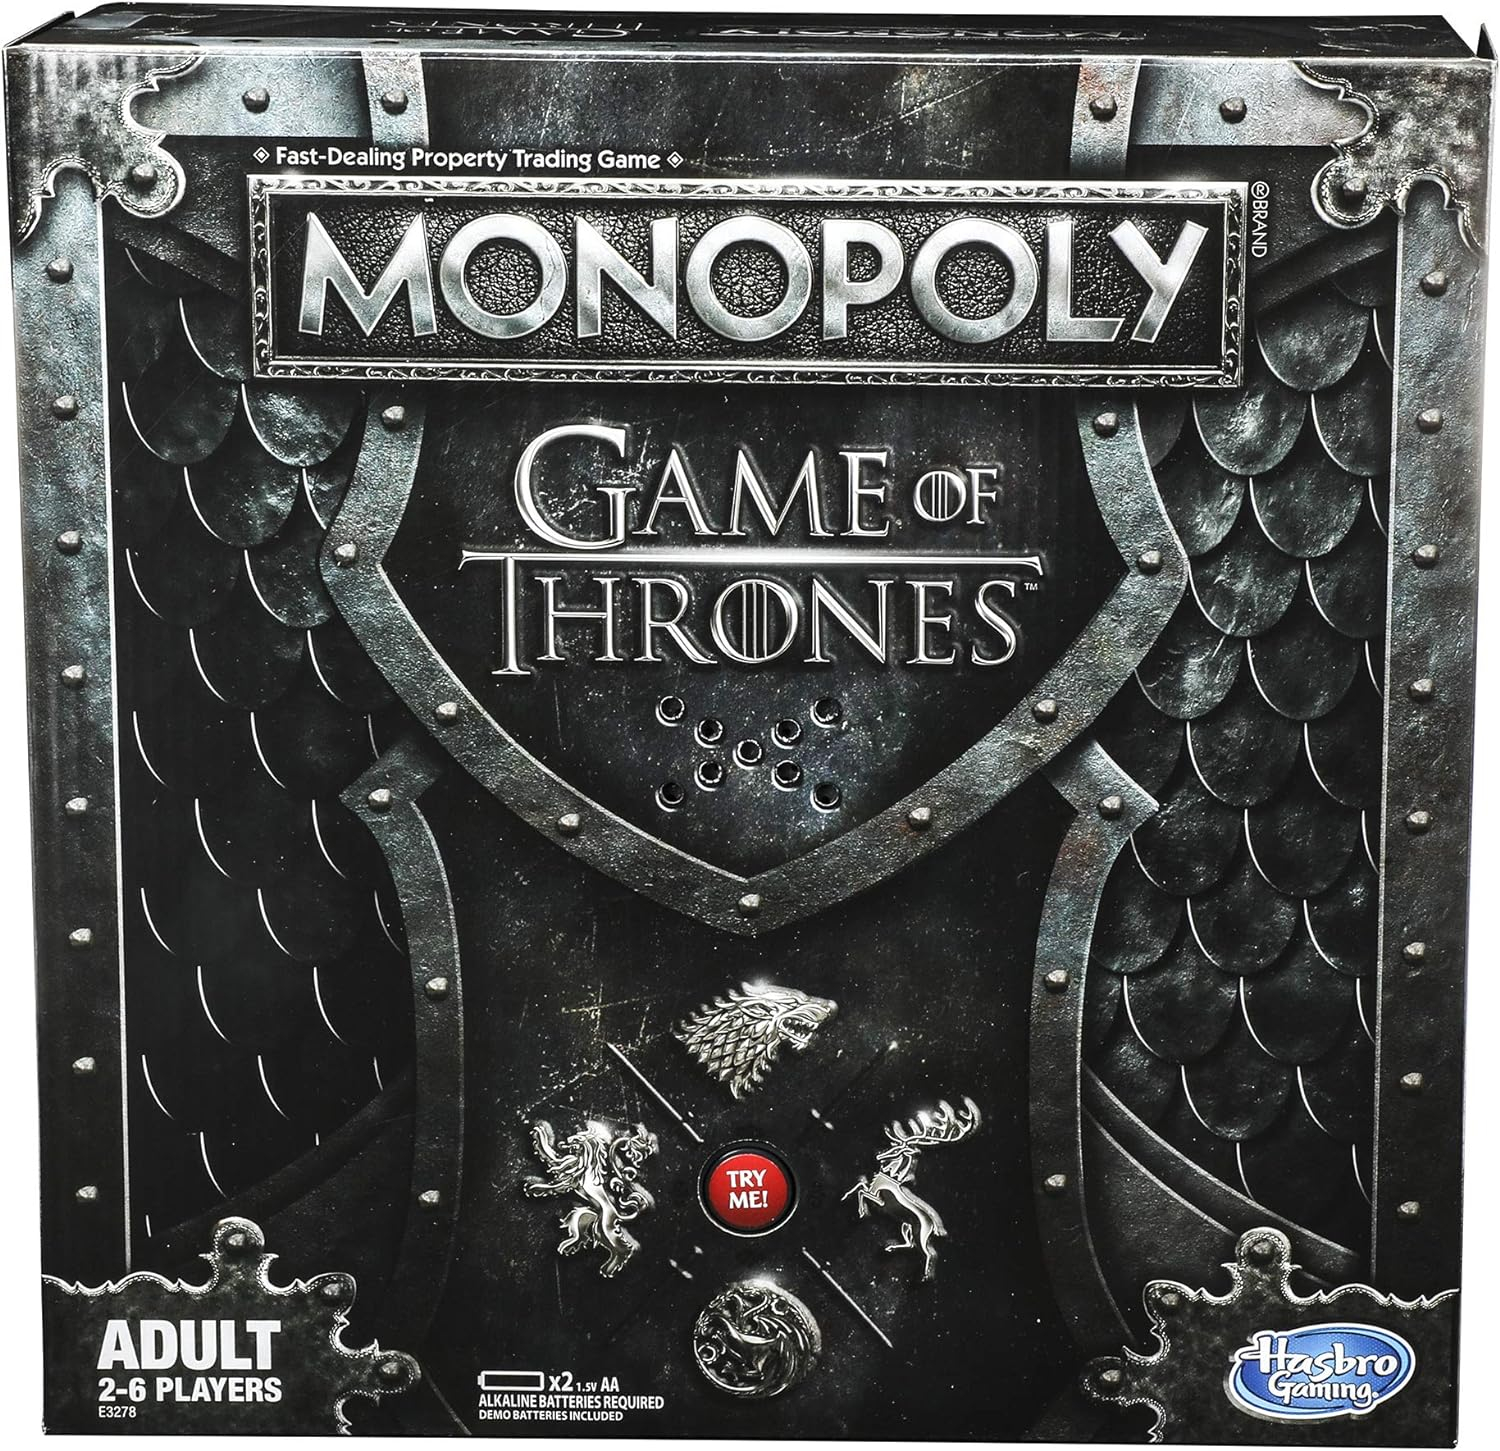 Hasbro Gaming Monopoly Game of Thrones Board Game for Adults, for 2 to 6 Players, Board Games for Adults (Amazon Exclusive)